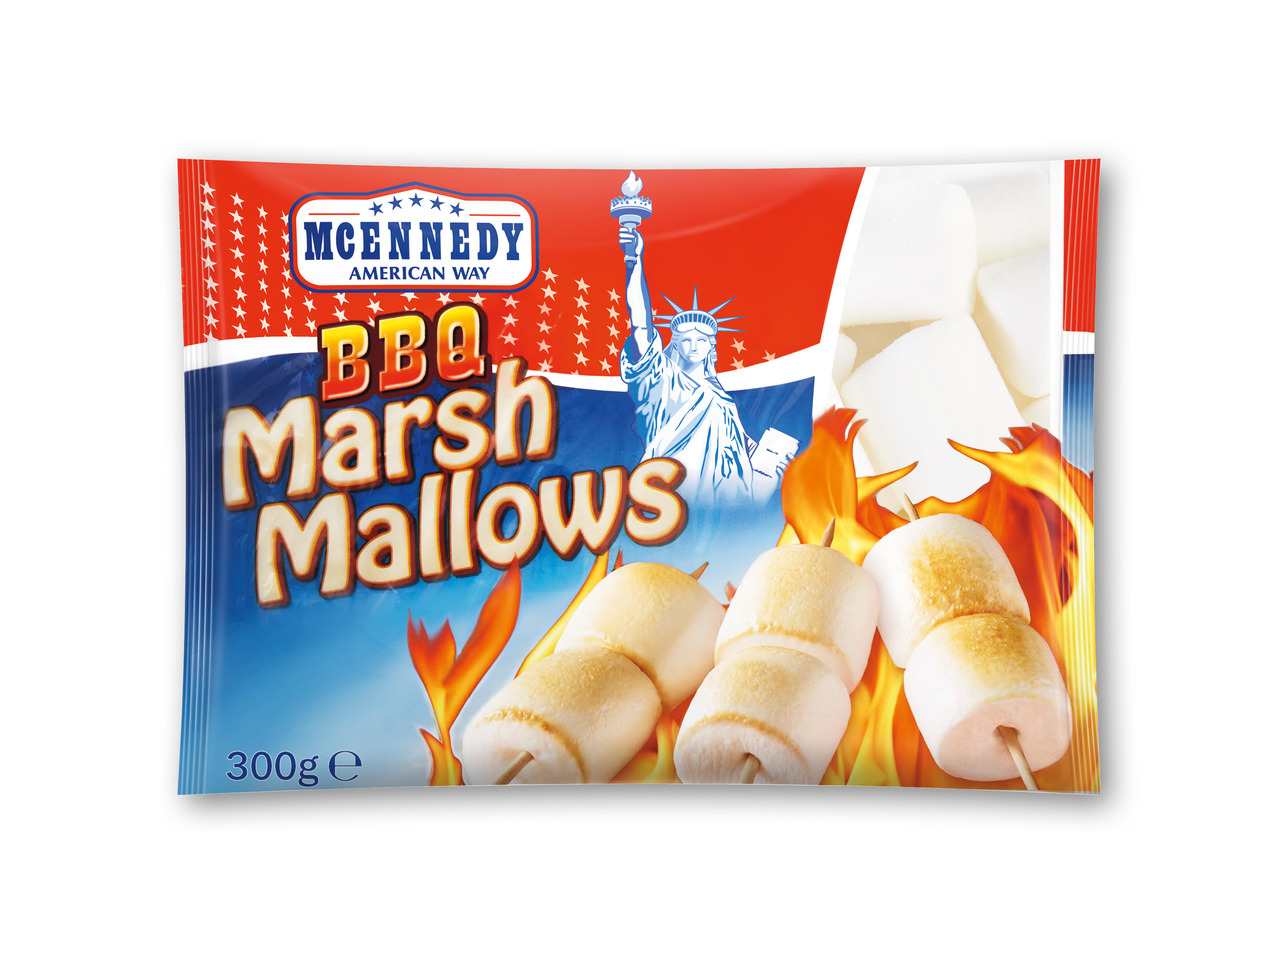 MCENNEDY BBQ Marsh Mallows